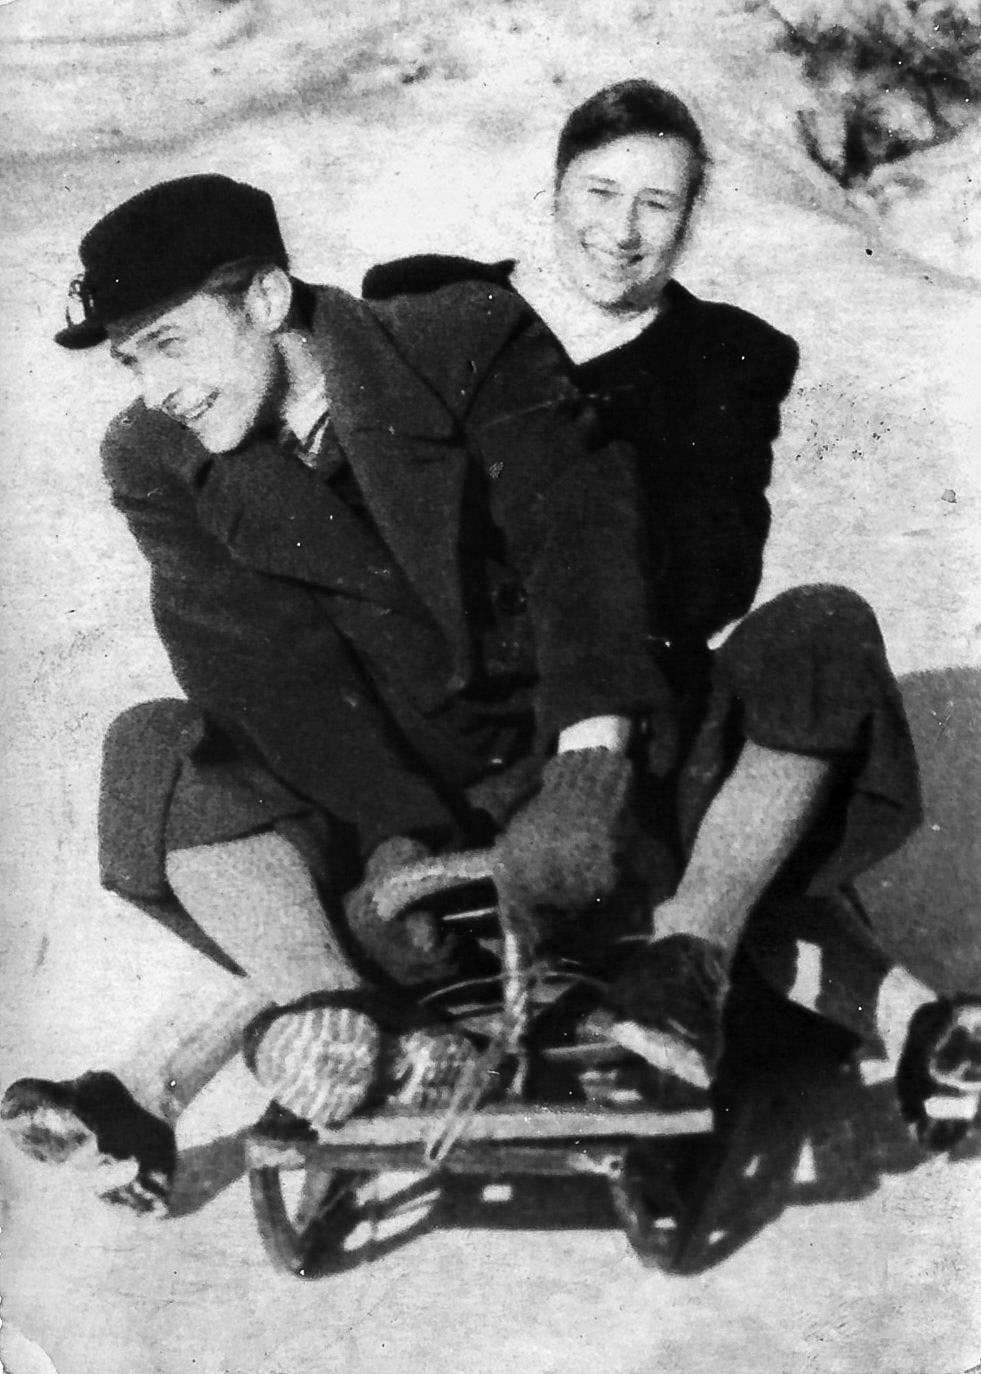 Vasyl Habda with his wife sledding